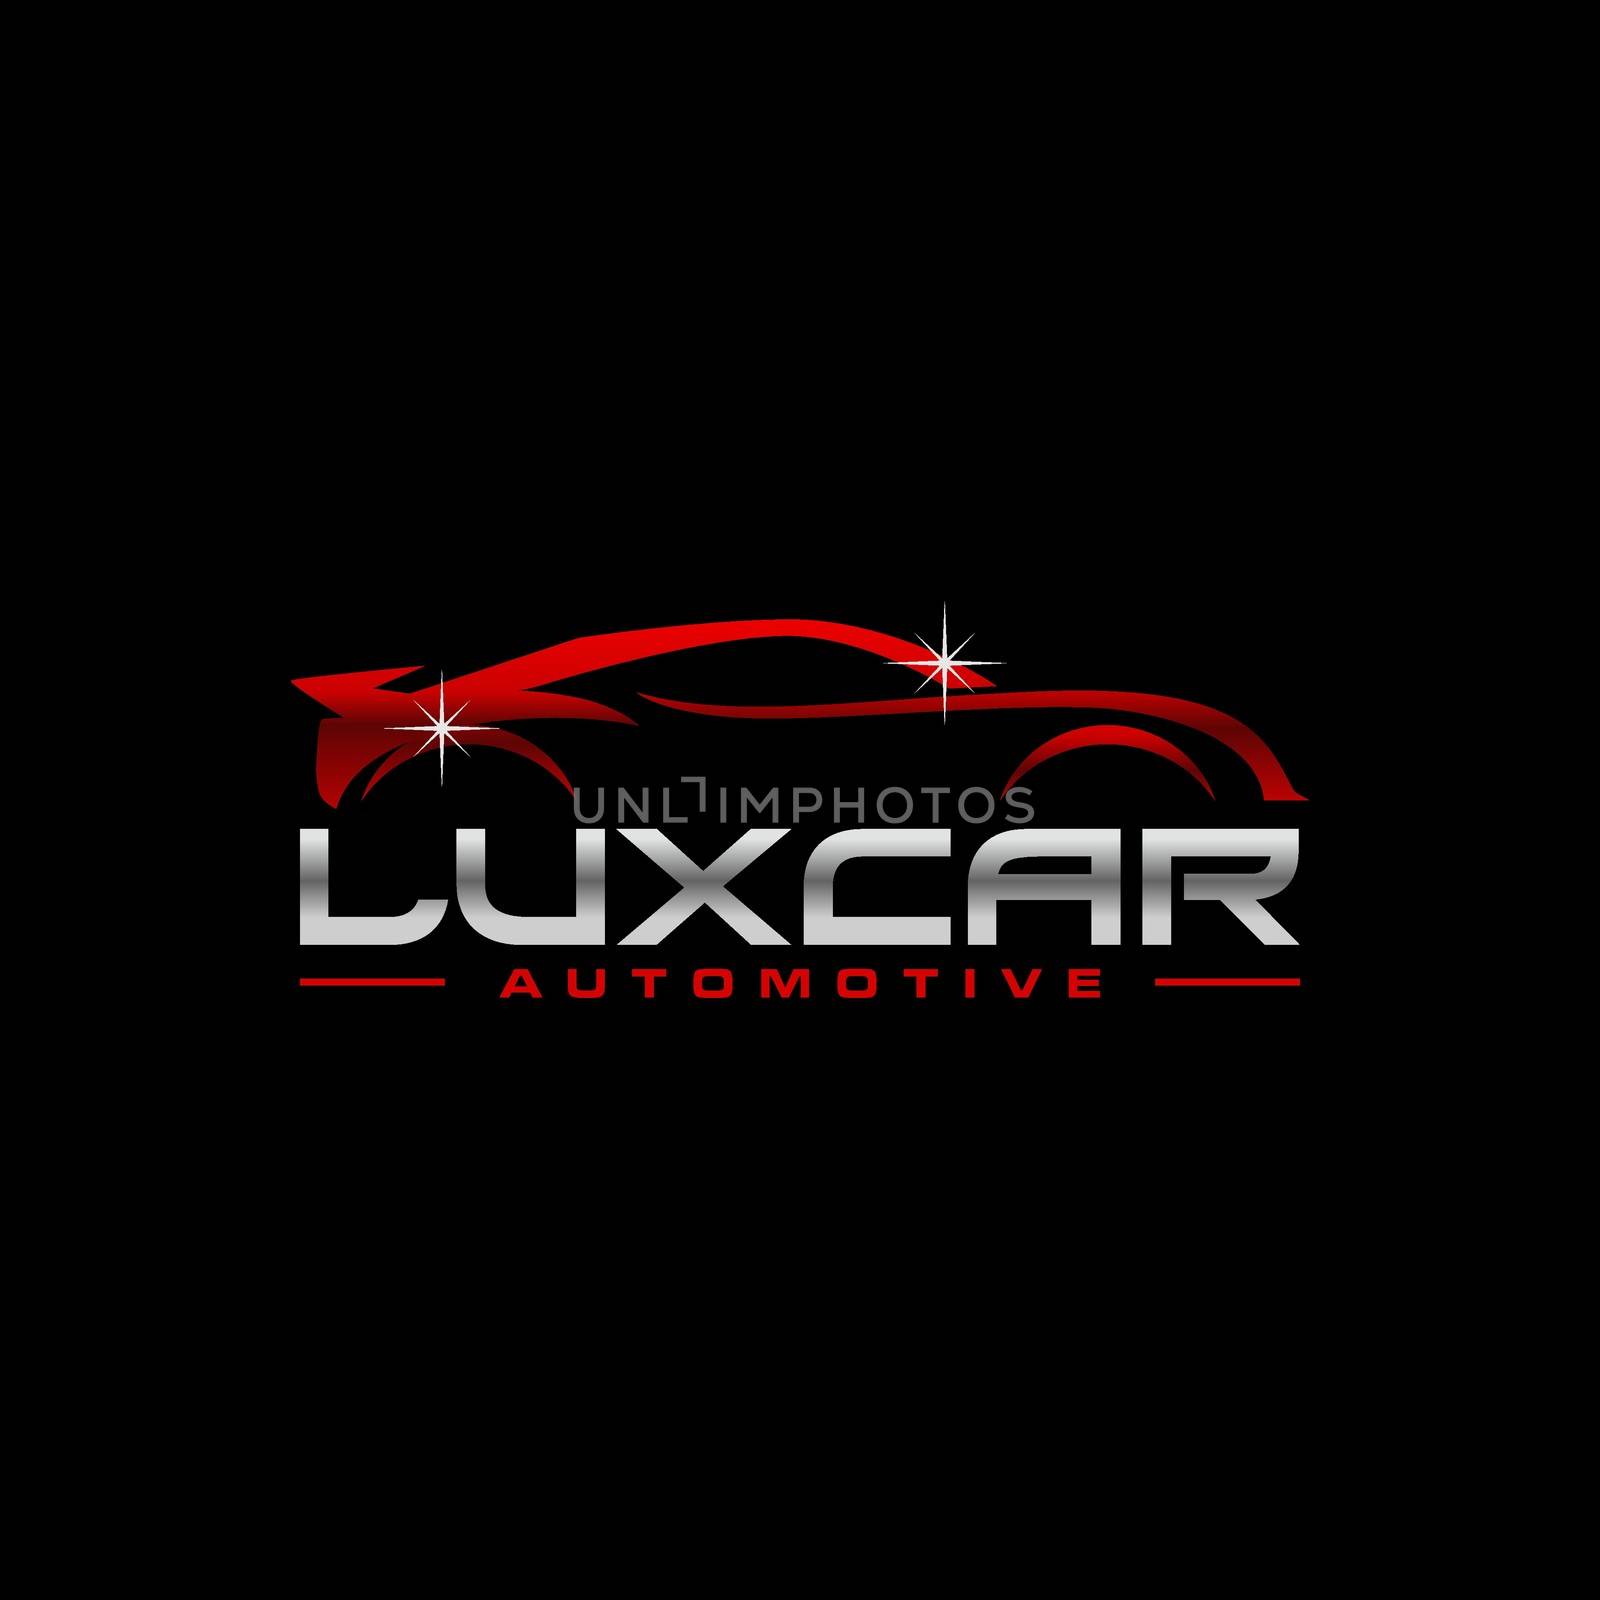 luxury auto car service company logo concept stock illustration by IreIru